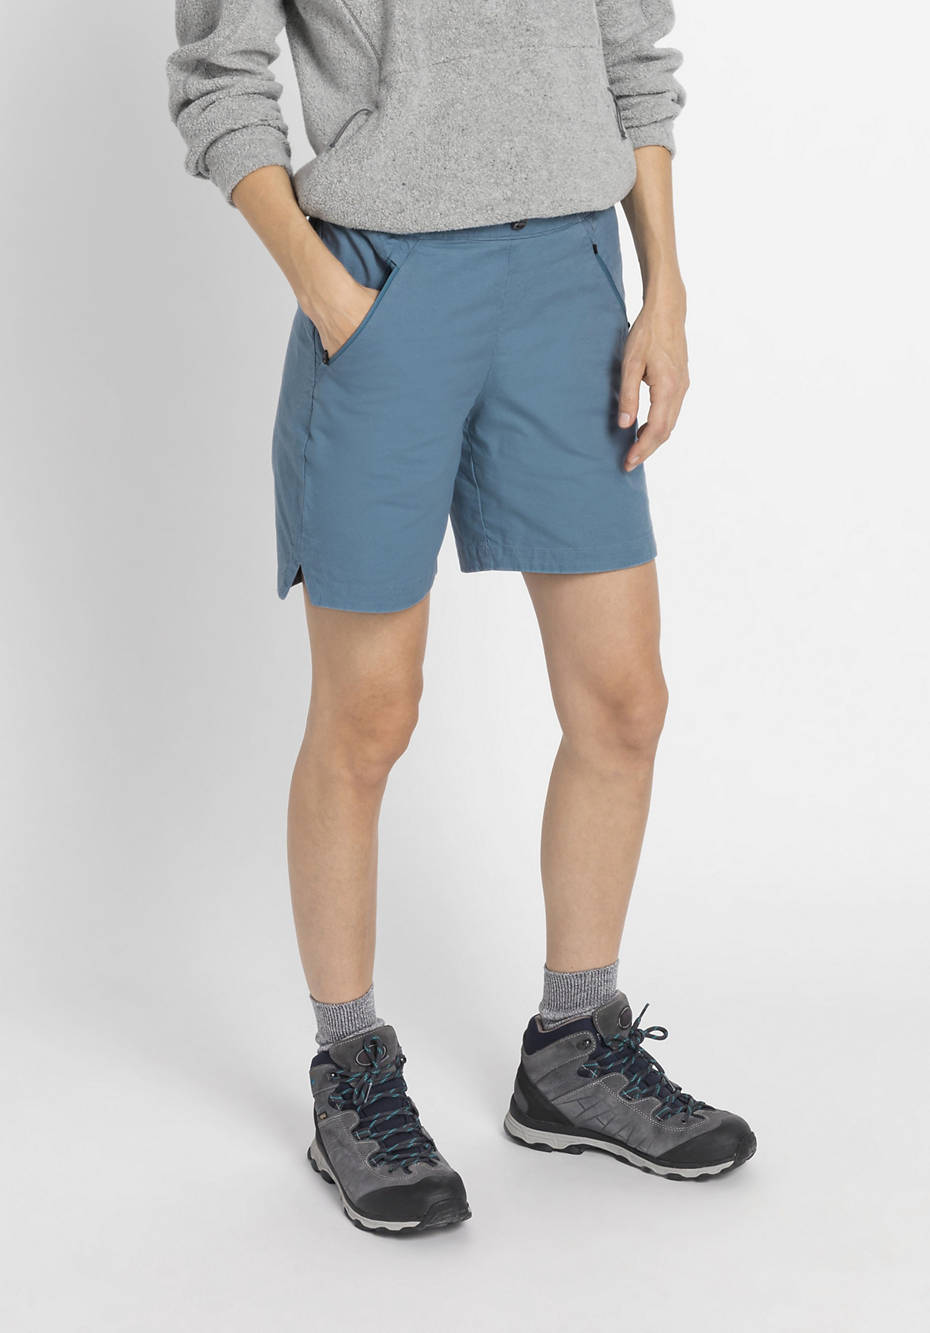 Organic cotton shorts with hemp